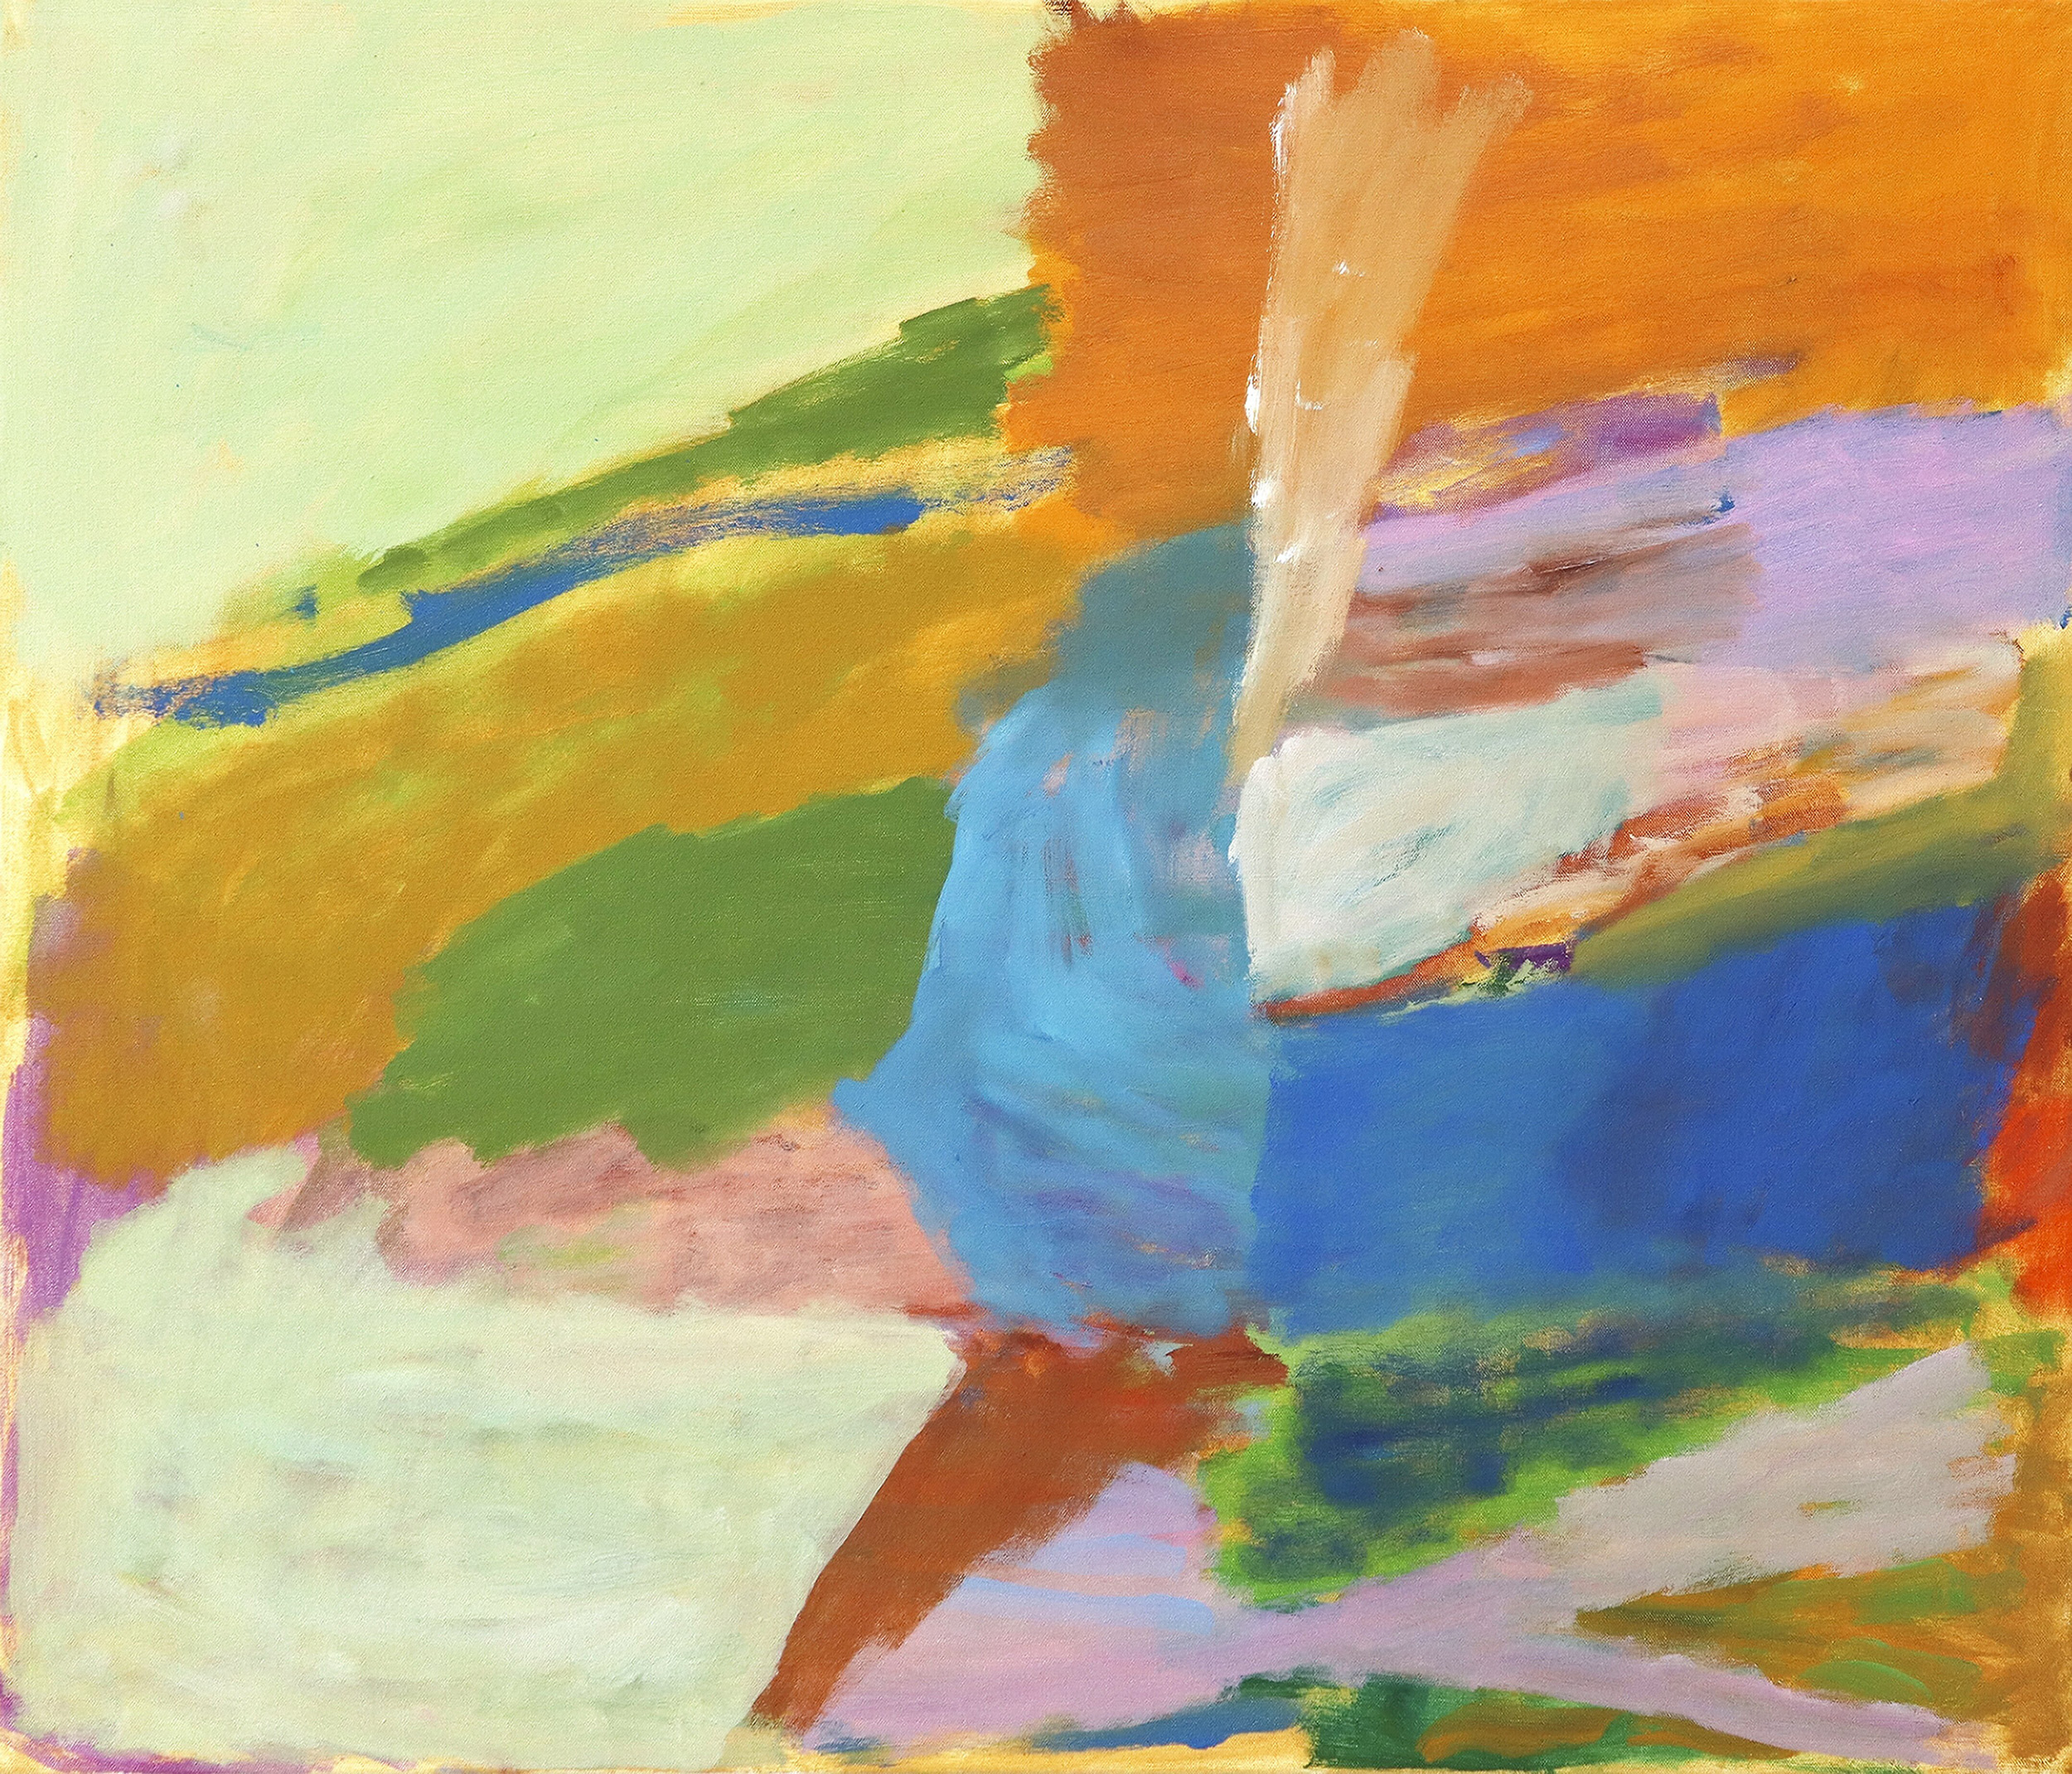 'Skailwind', Lynsey MacKenzie, Oil on Canvas, 61 x 71.5 cm